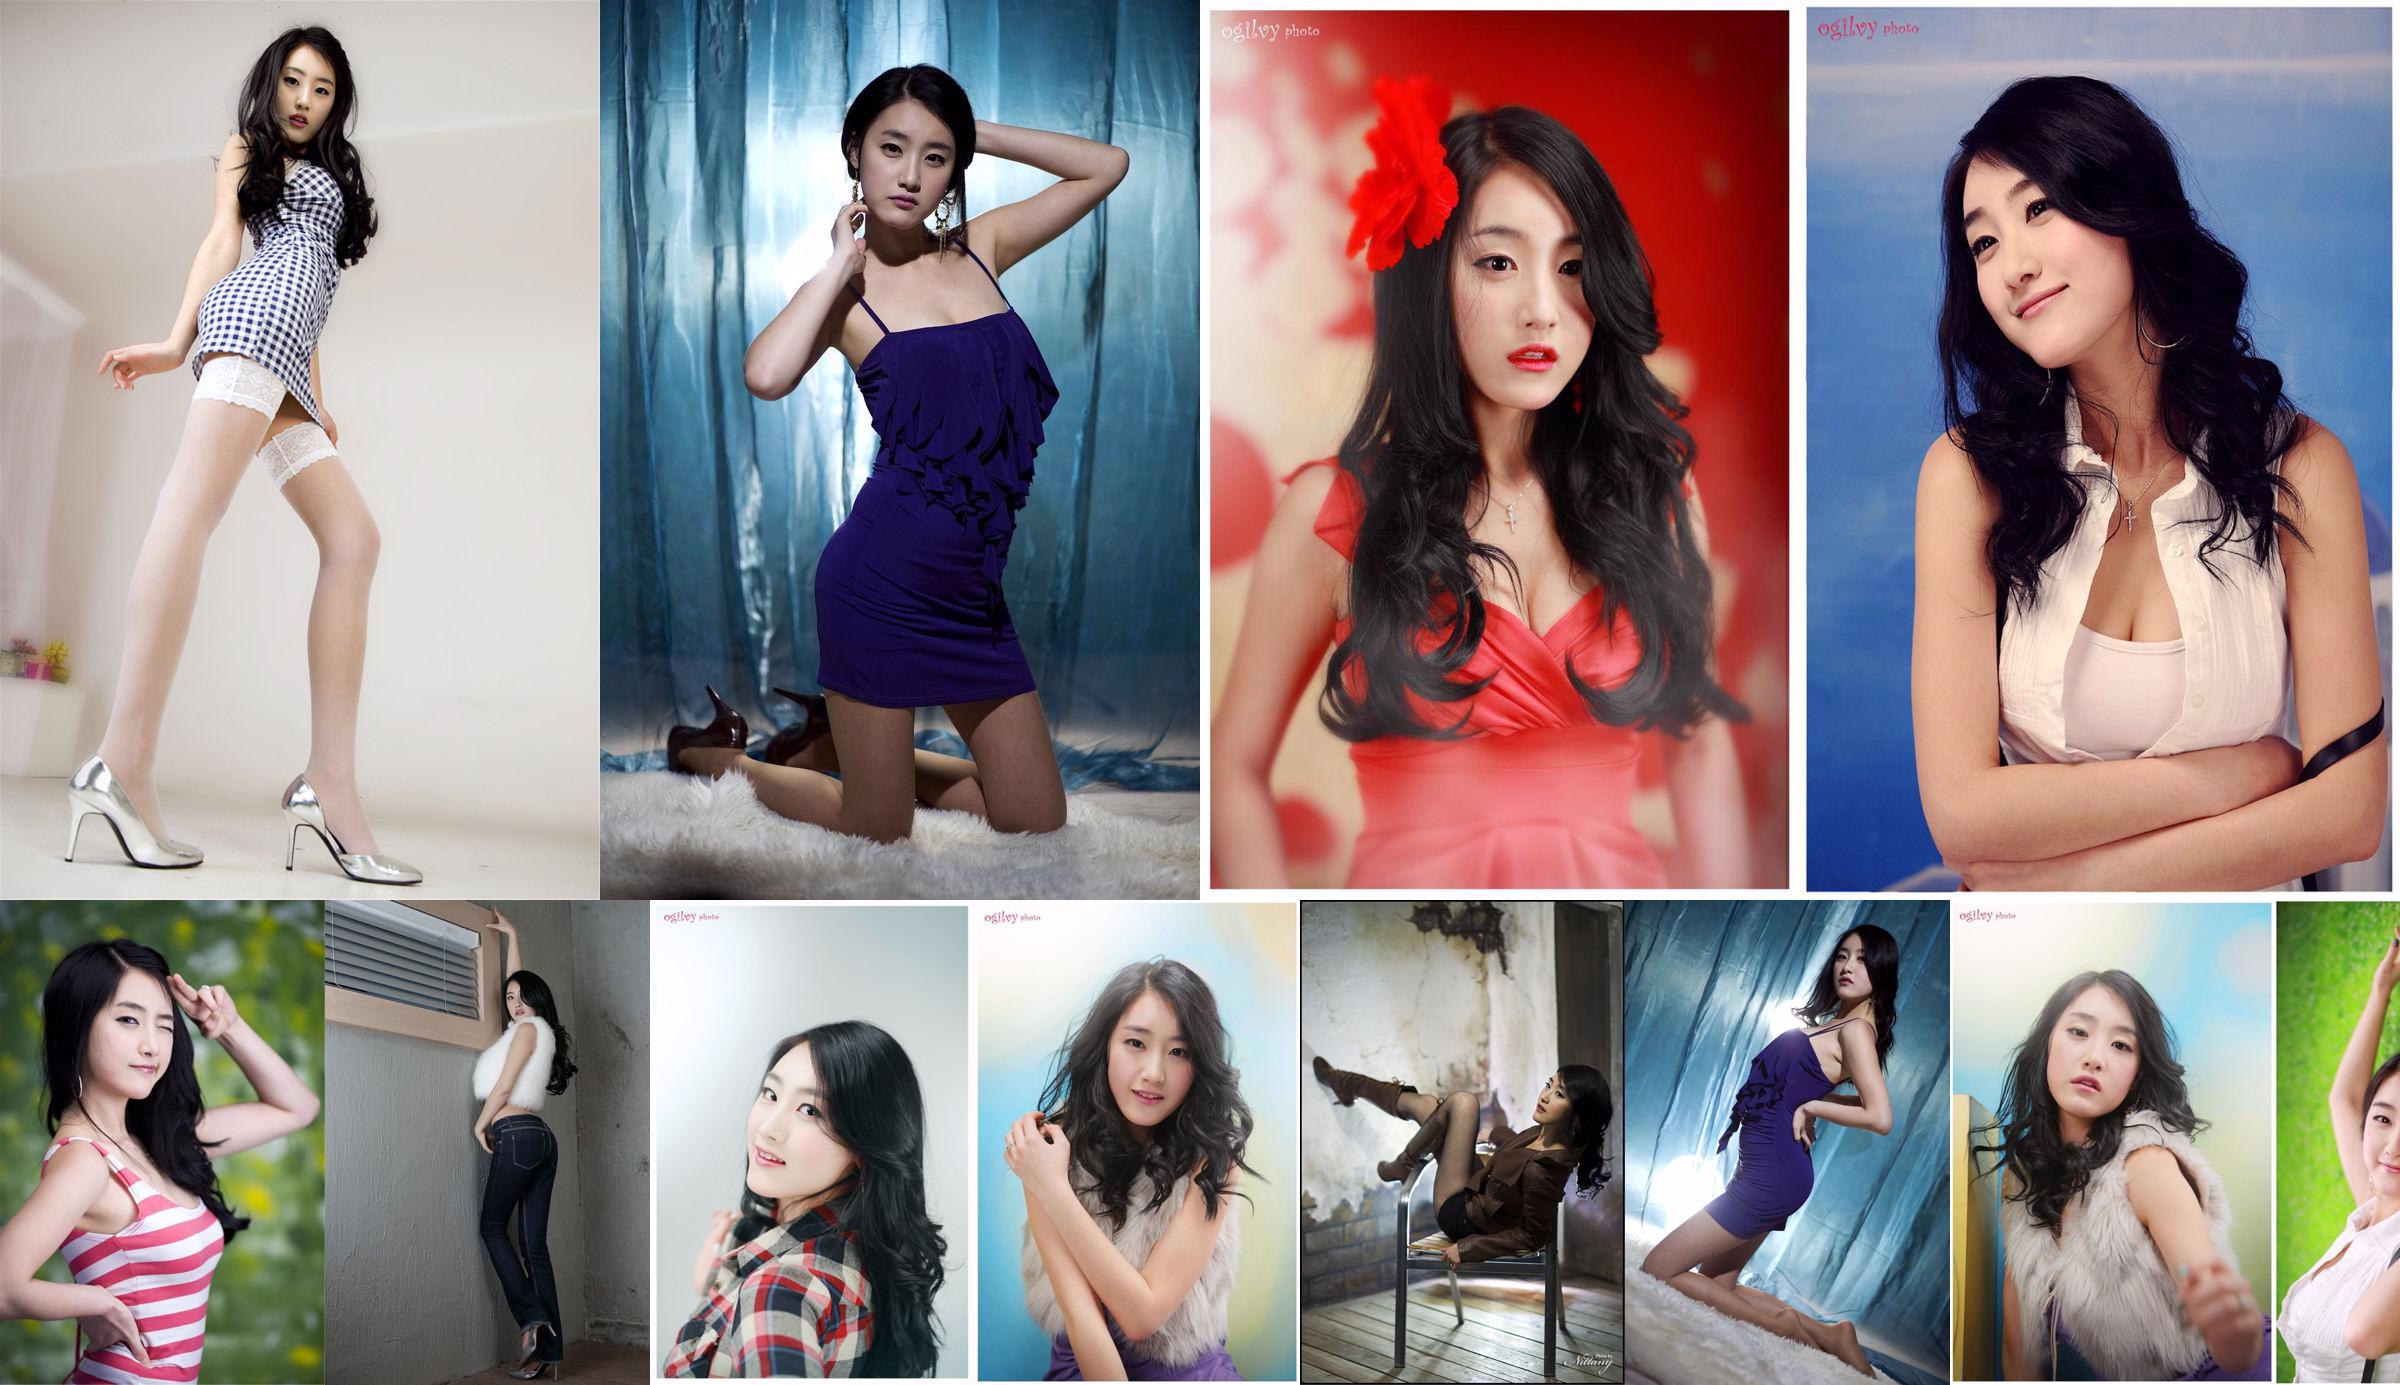 [Koreanisches Modell] Choi Zhixiang gestreiftes Foto Bild No.1a113a Seite 1